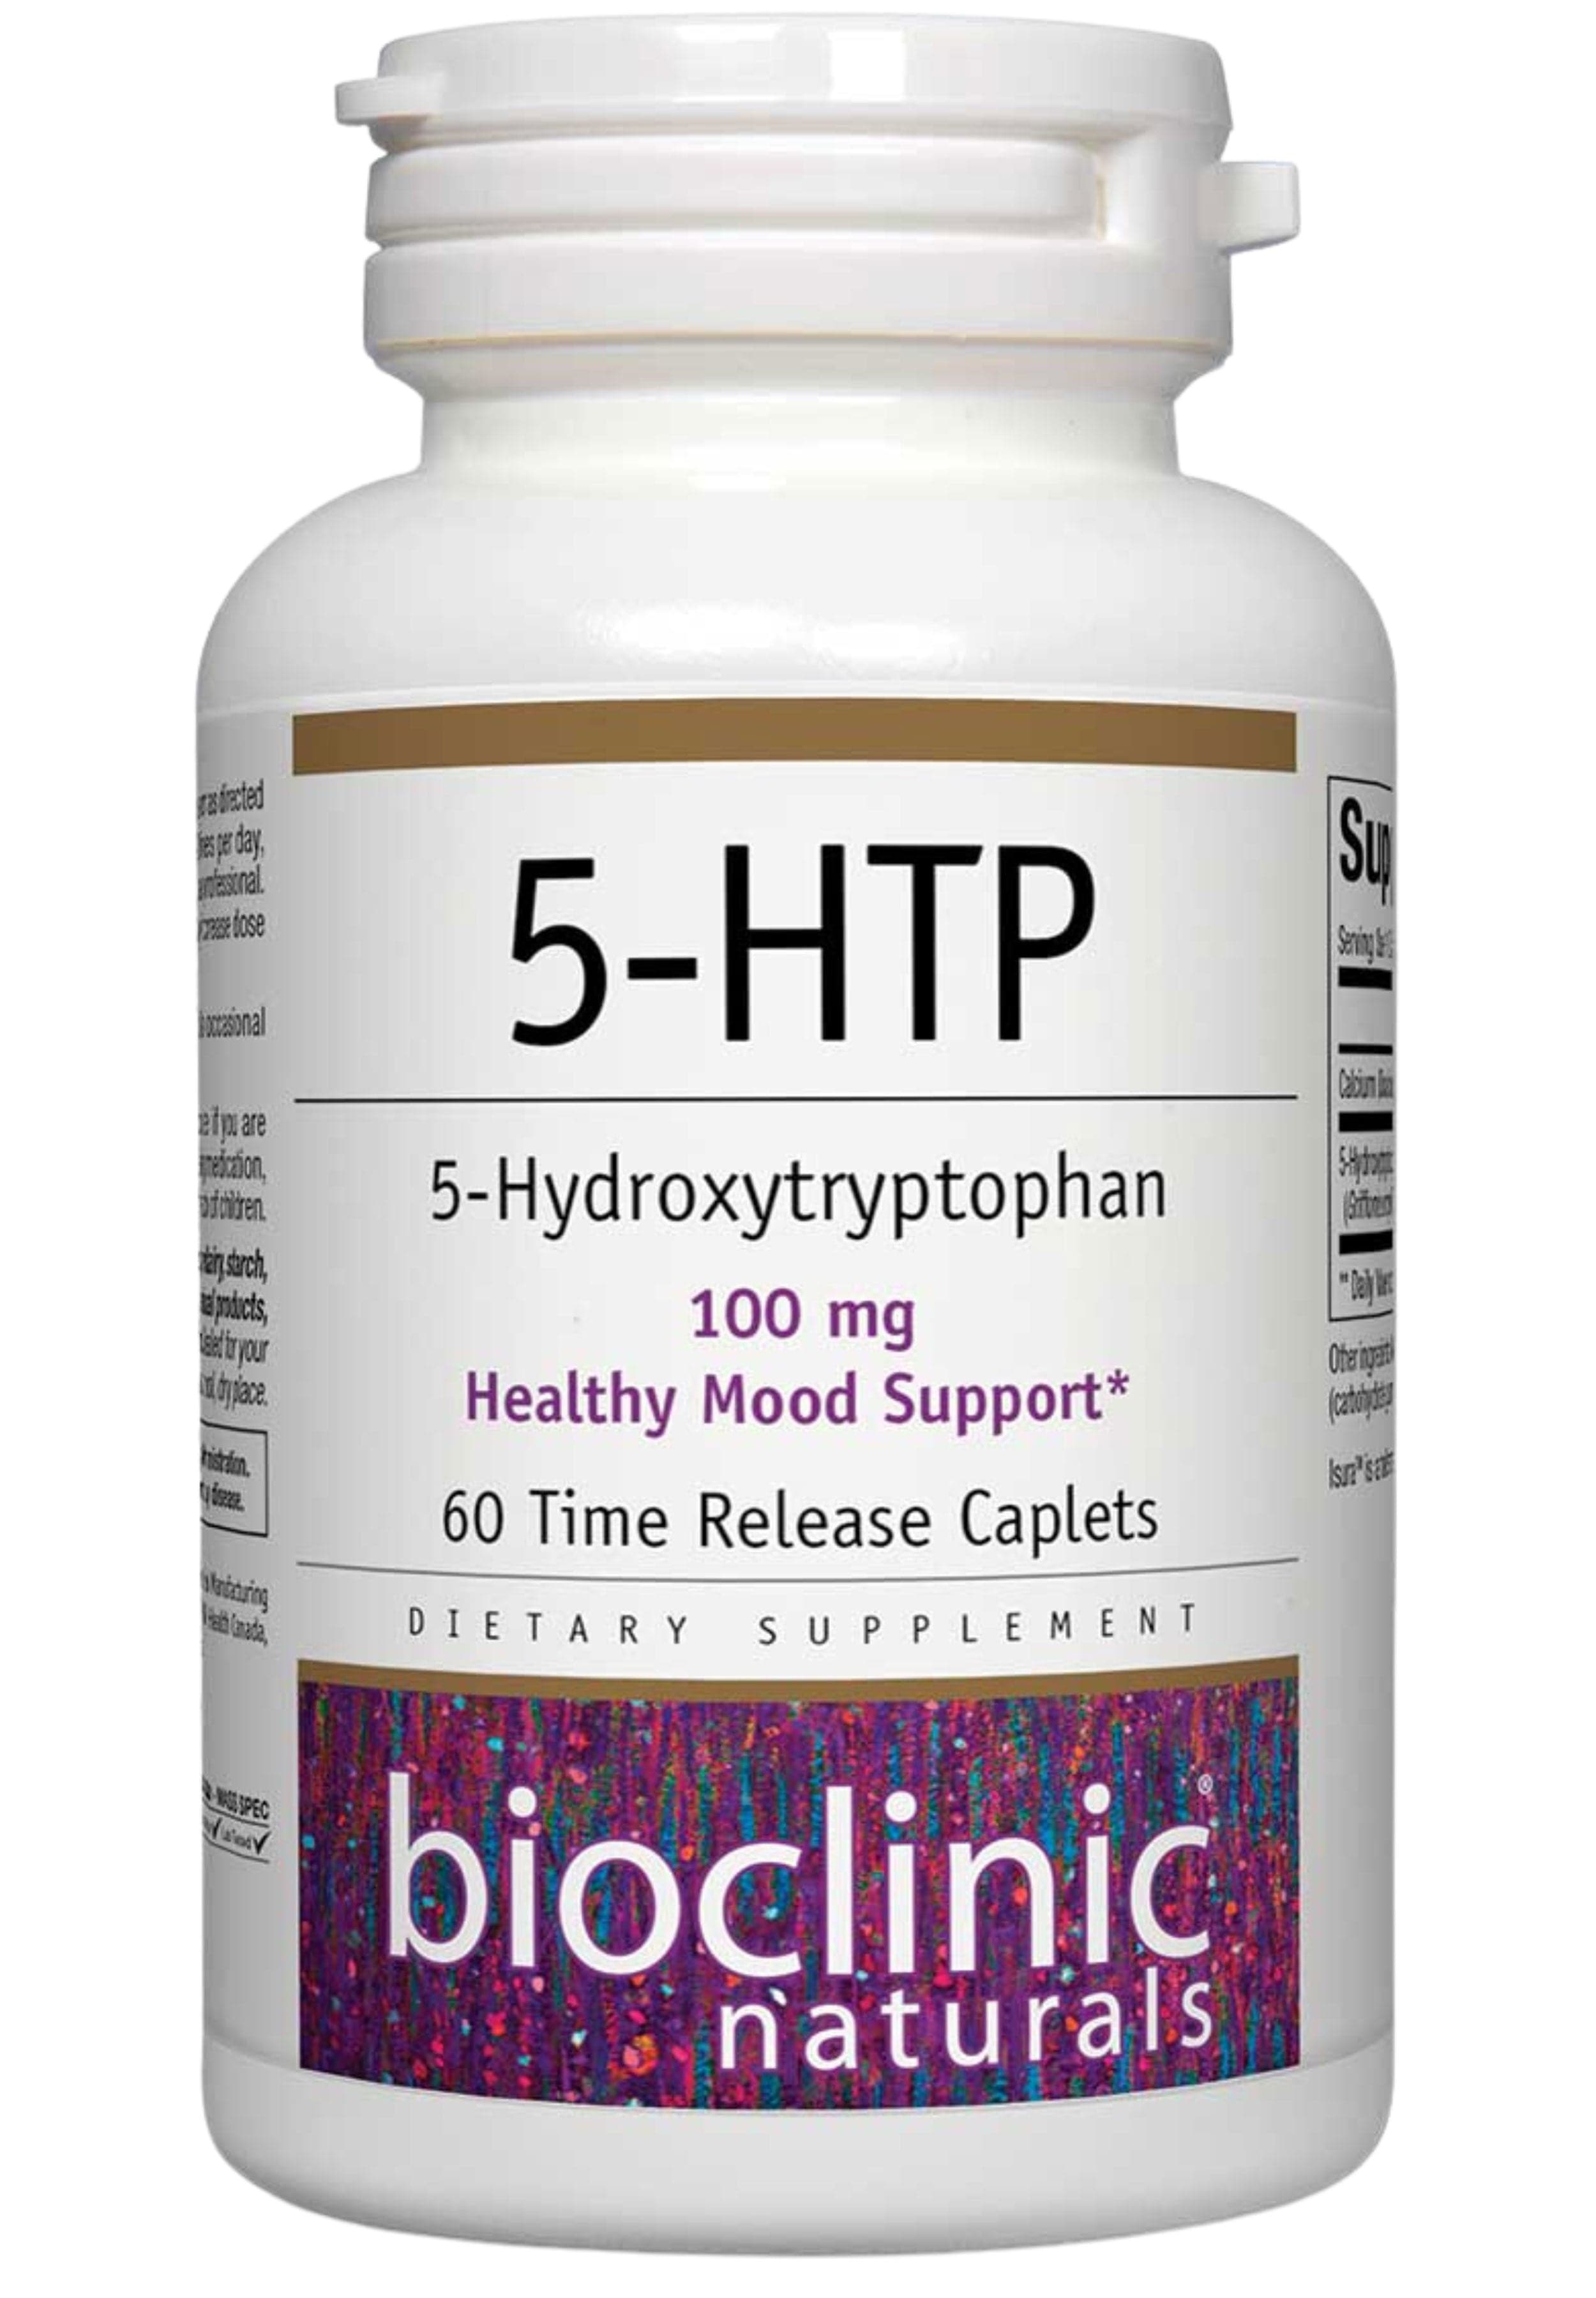 Bioclinic Naturals 5-HTP 100 mg